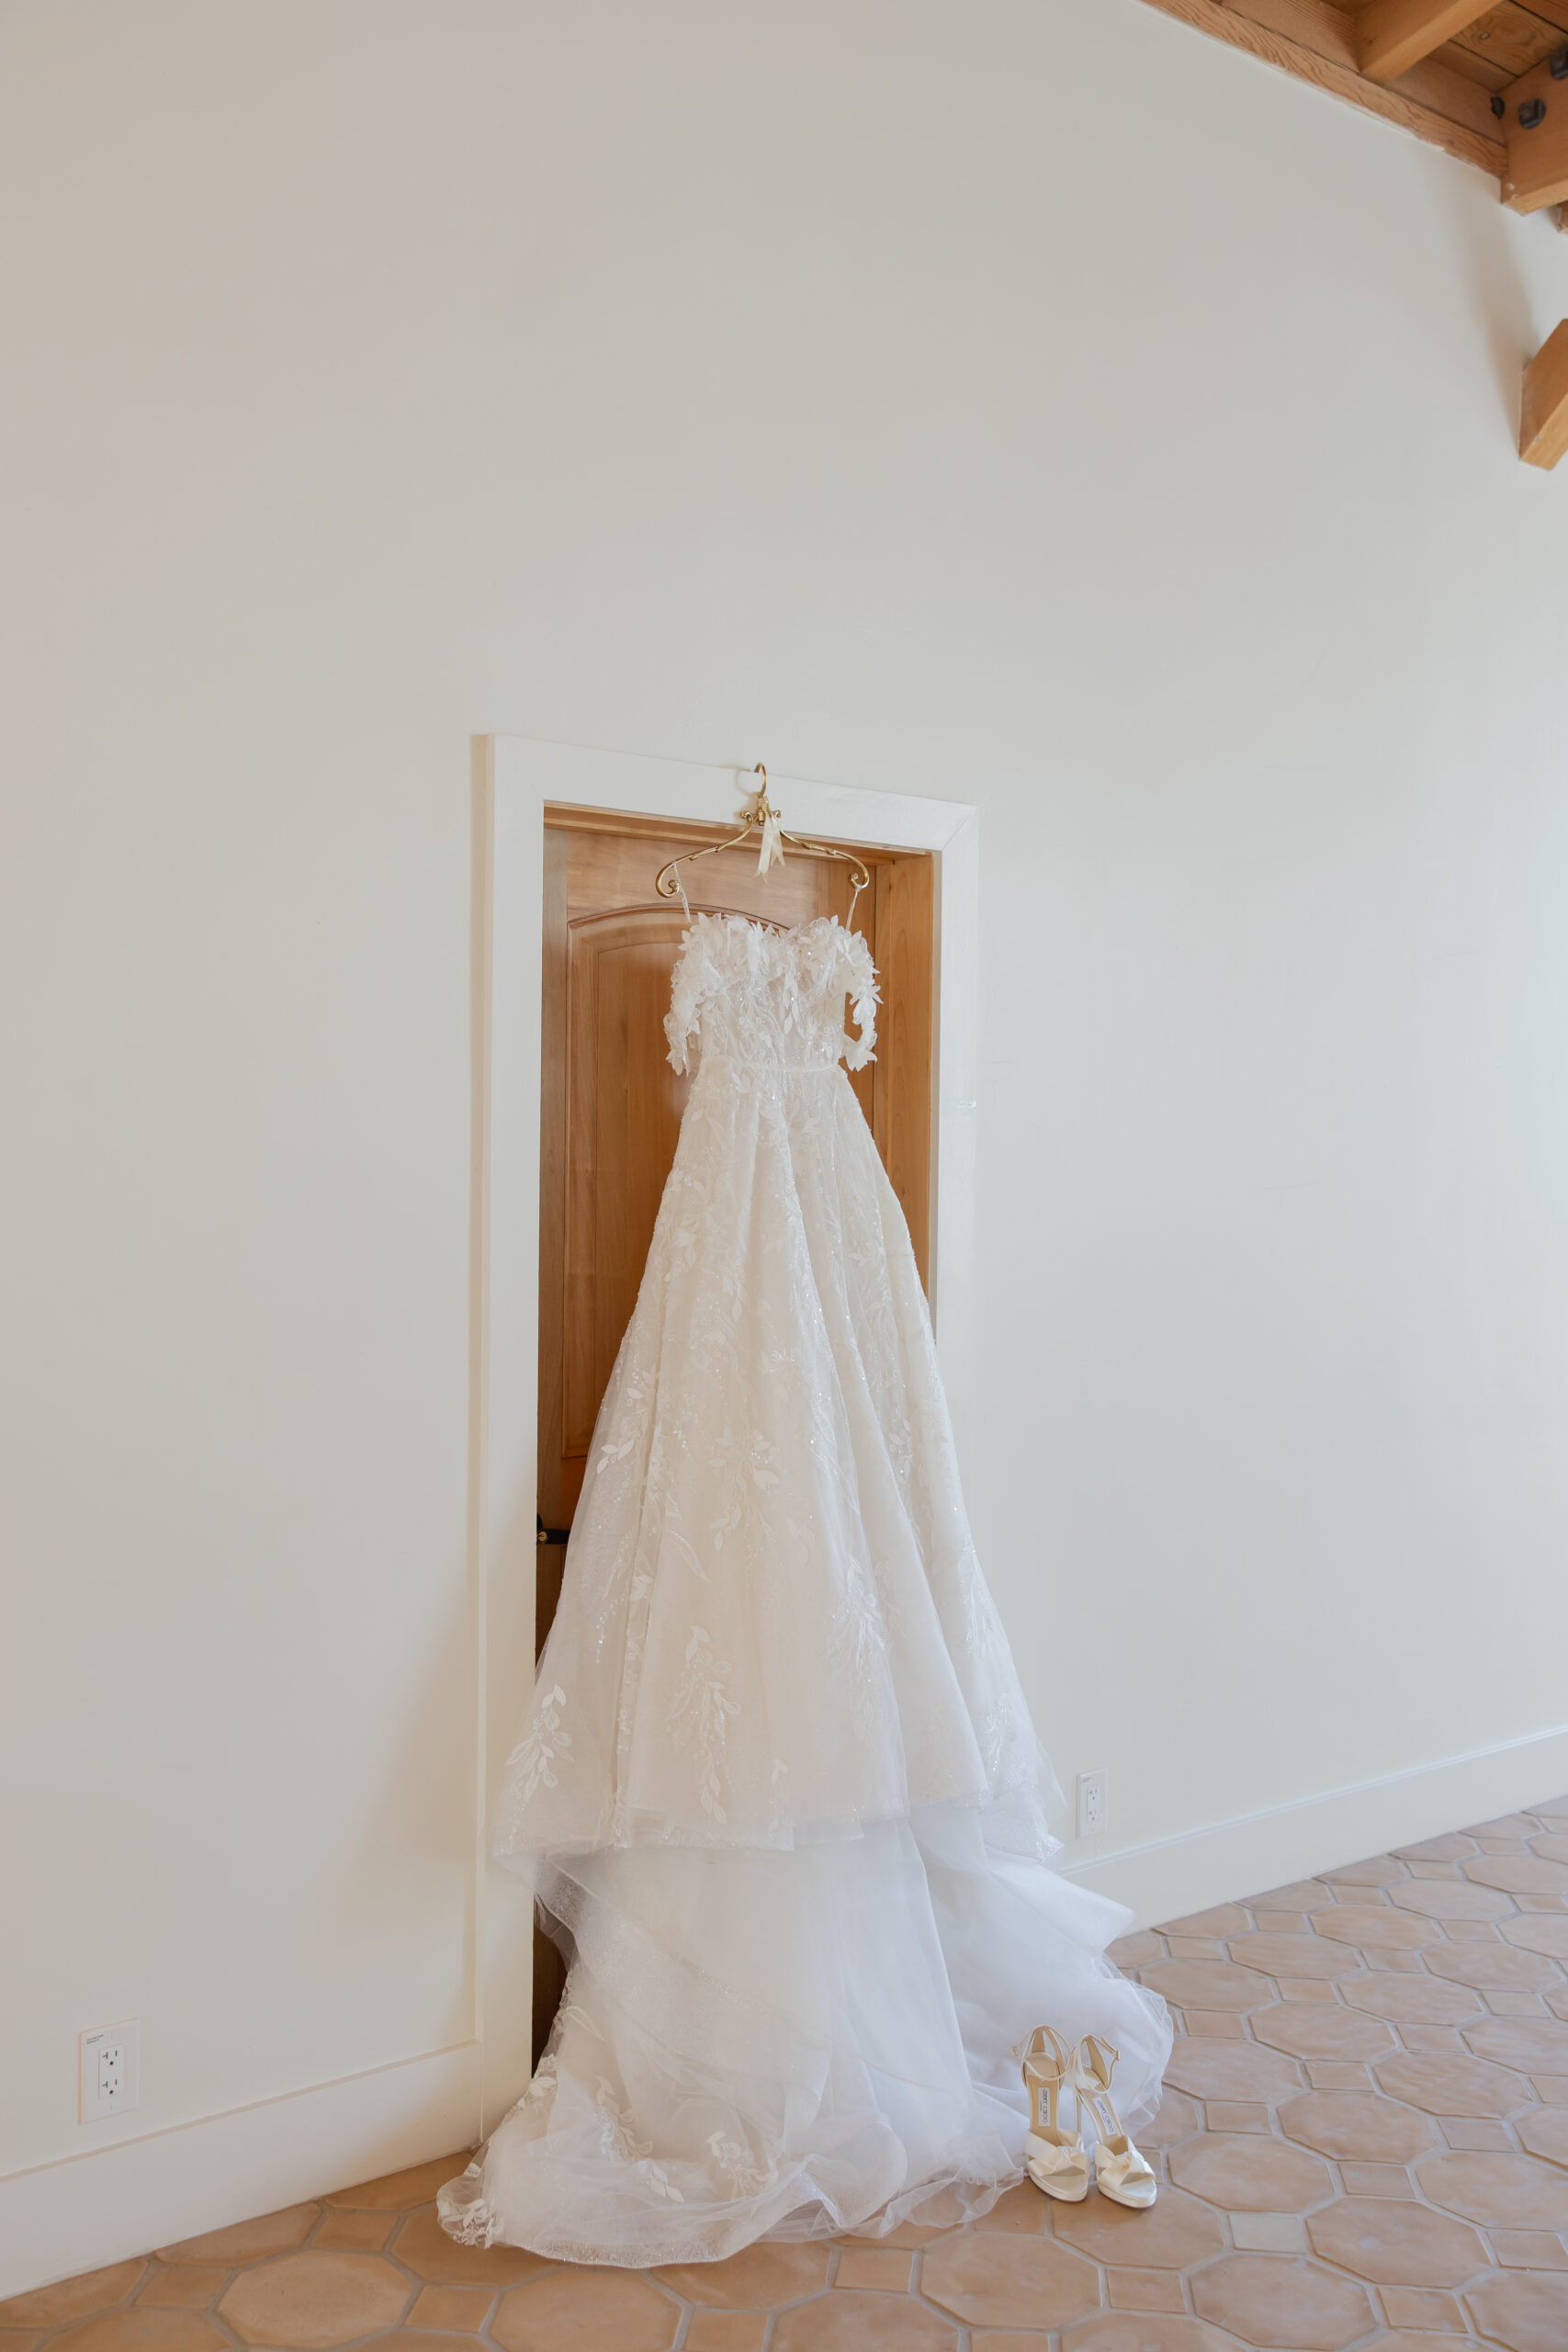 Wedding dress hanging portrait from a wooden door at Grand Gimeno.